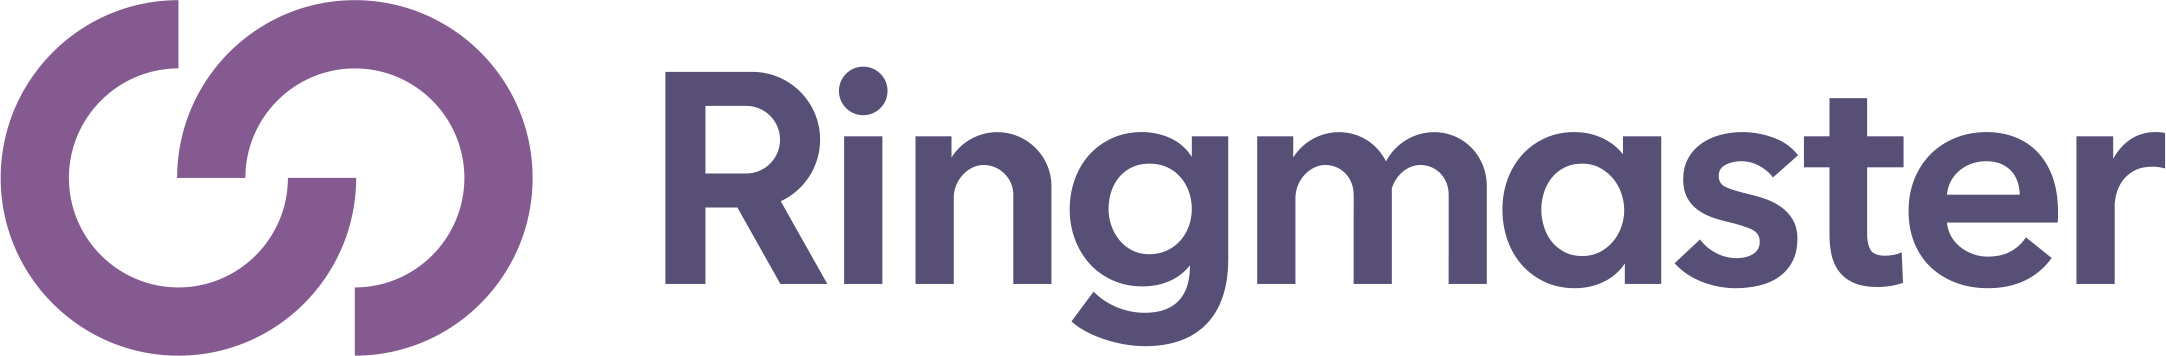 Ringmaster Technologies logo